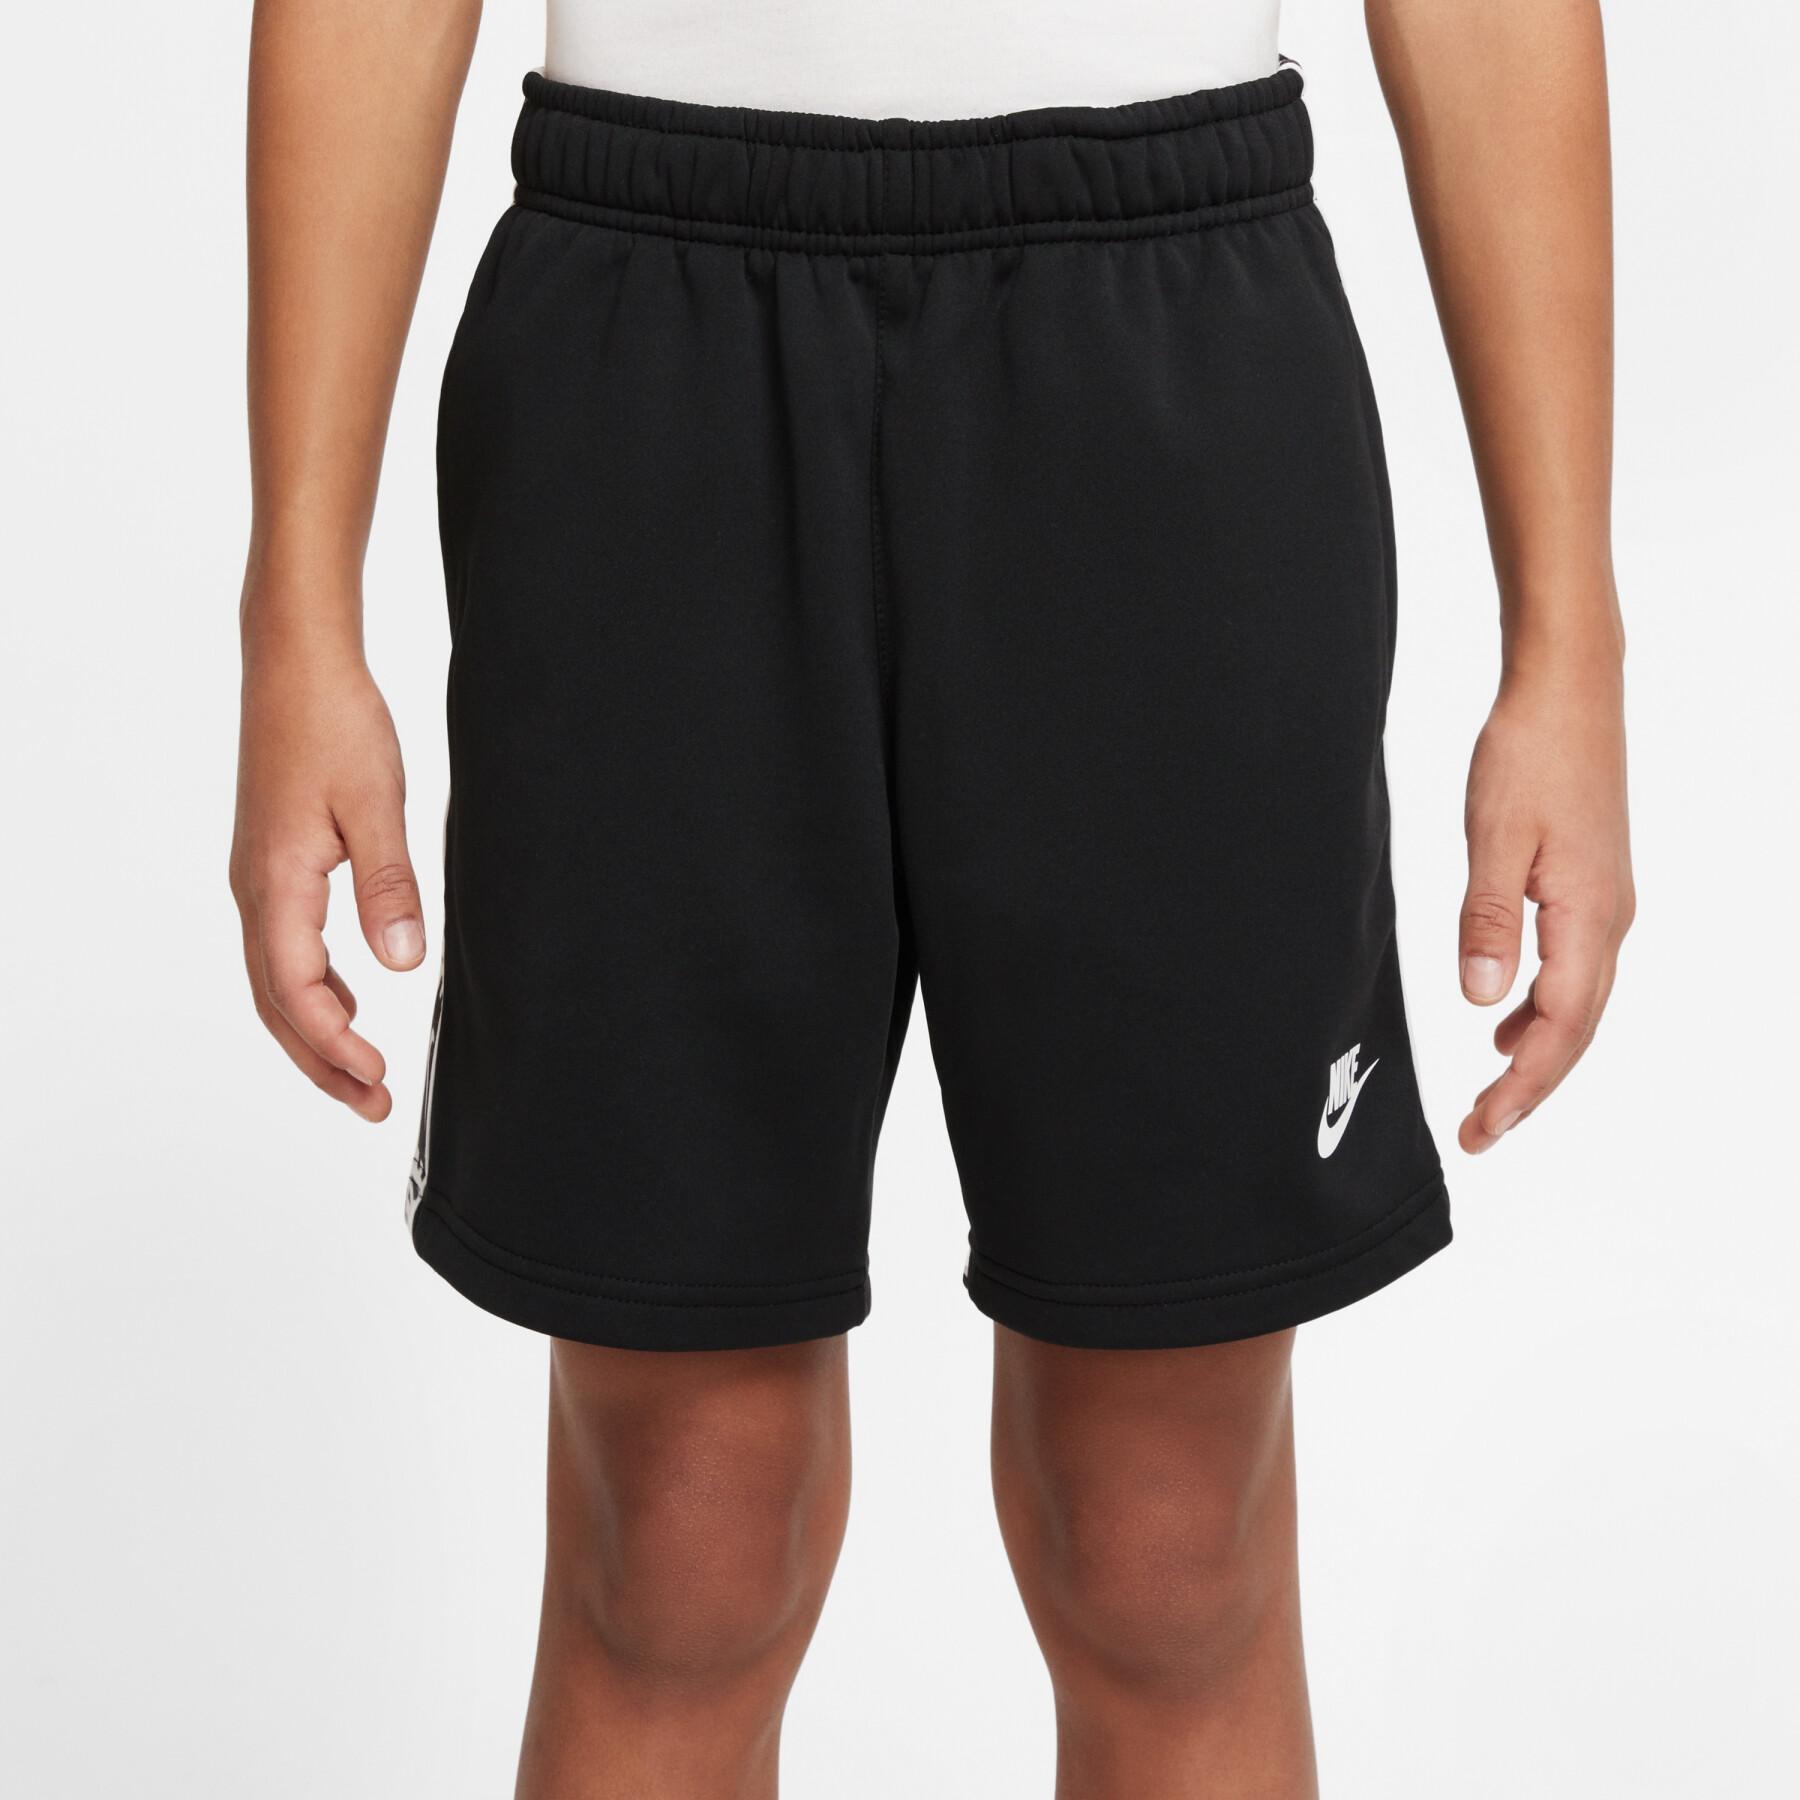 Children's shorts Nike Repeat